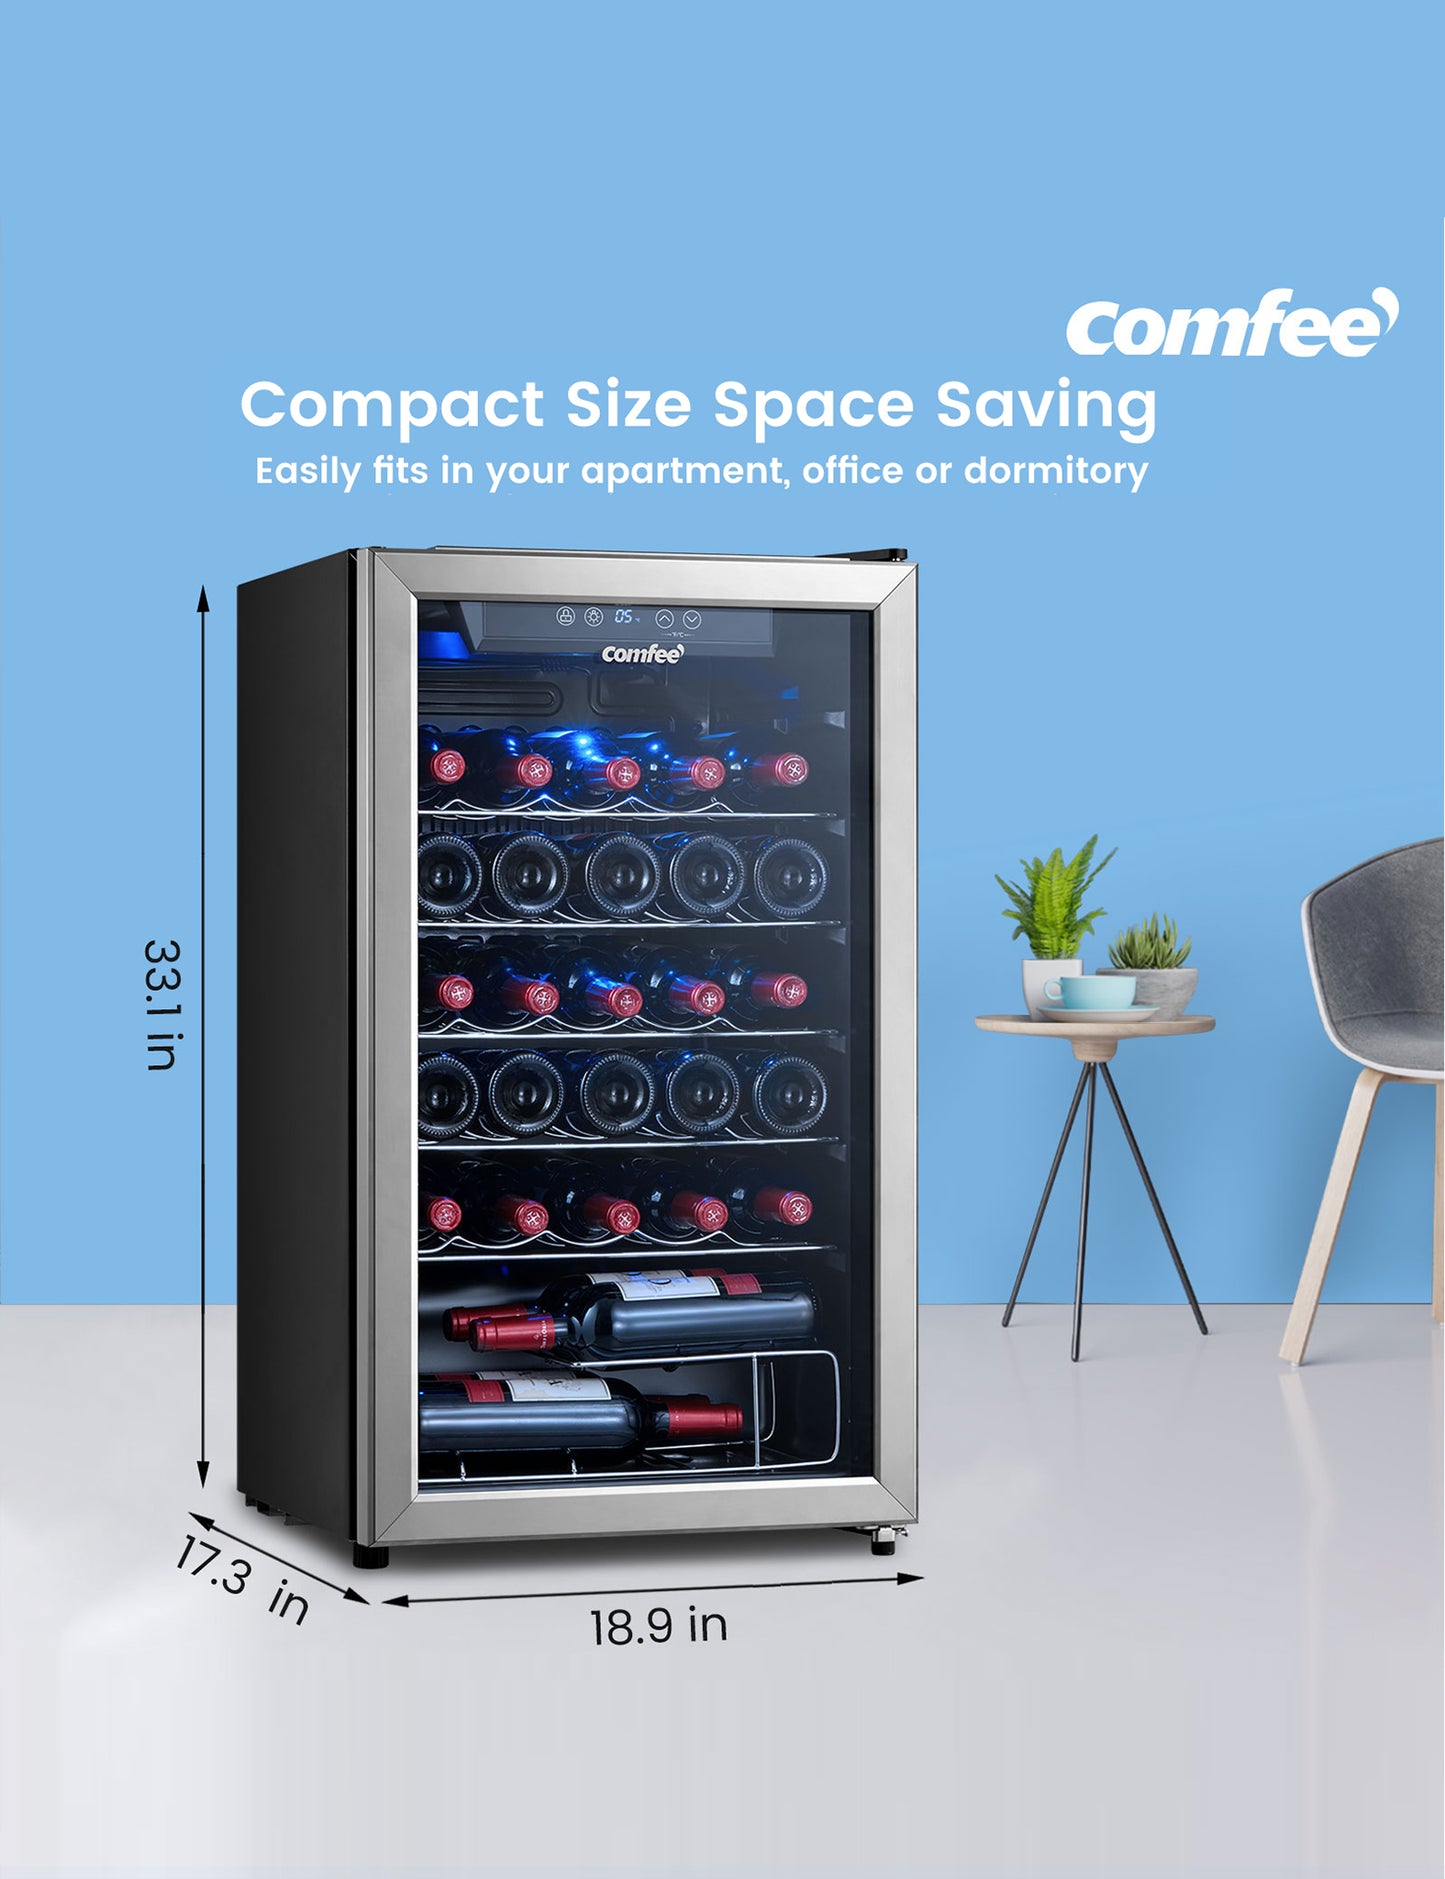 measurements of the comfee wine cooler refrigerator